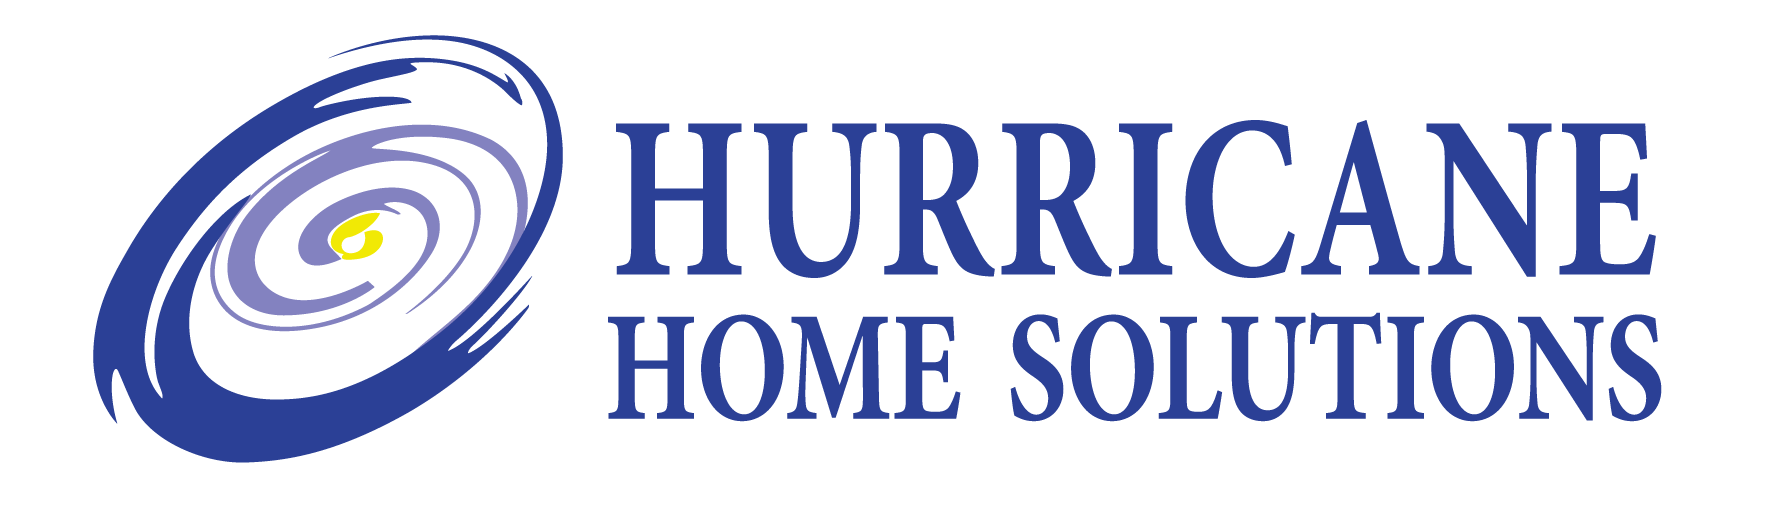 Hurricane Home Solutions Inc logo